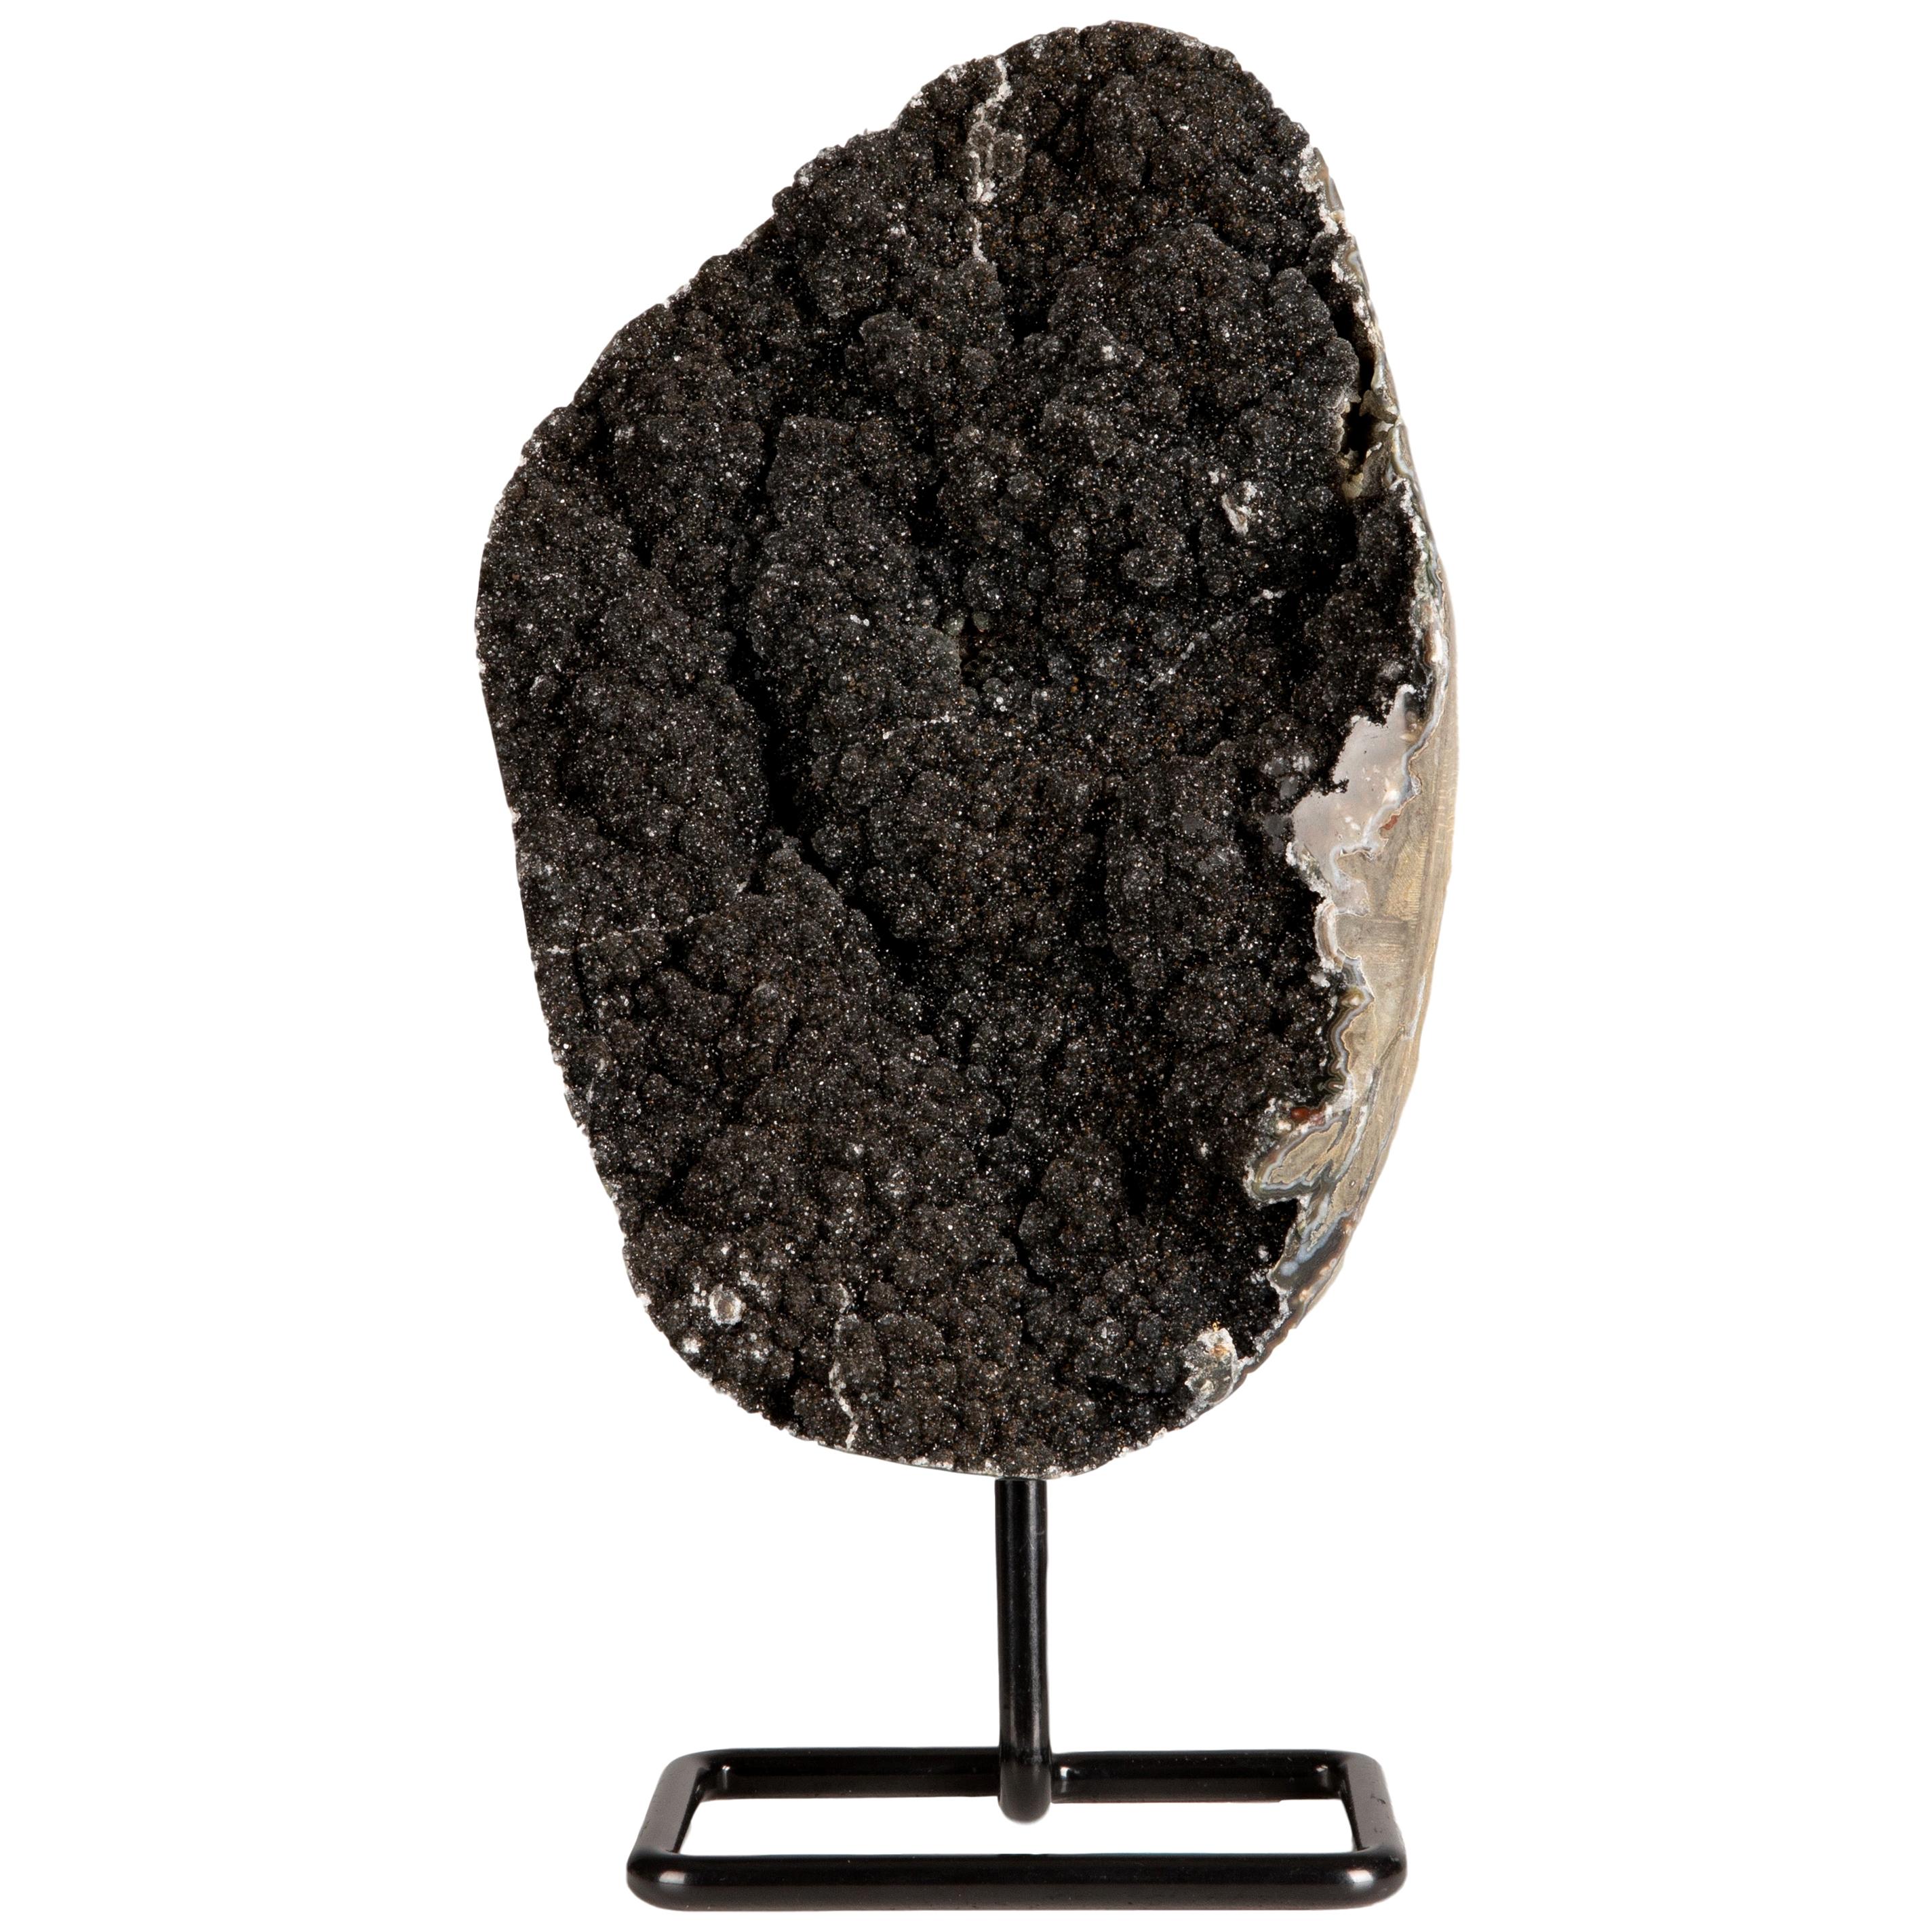 Unusual Black Amethyst Druze Formation on Metal Stand